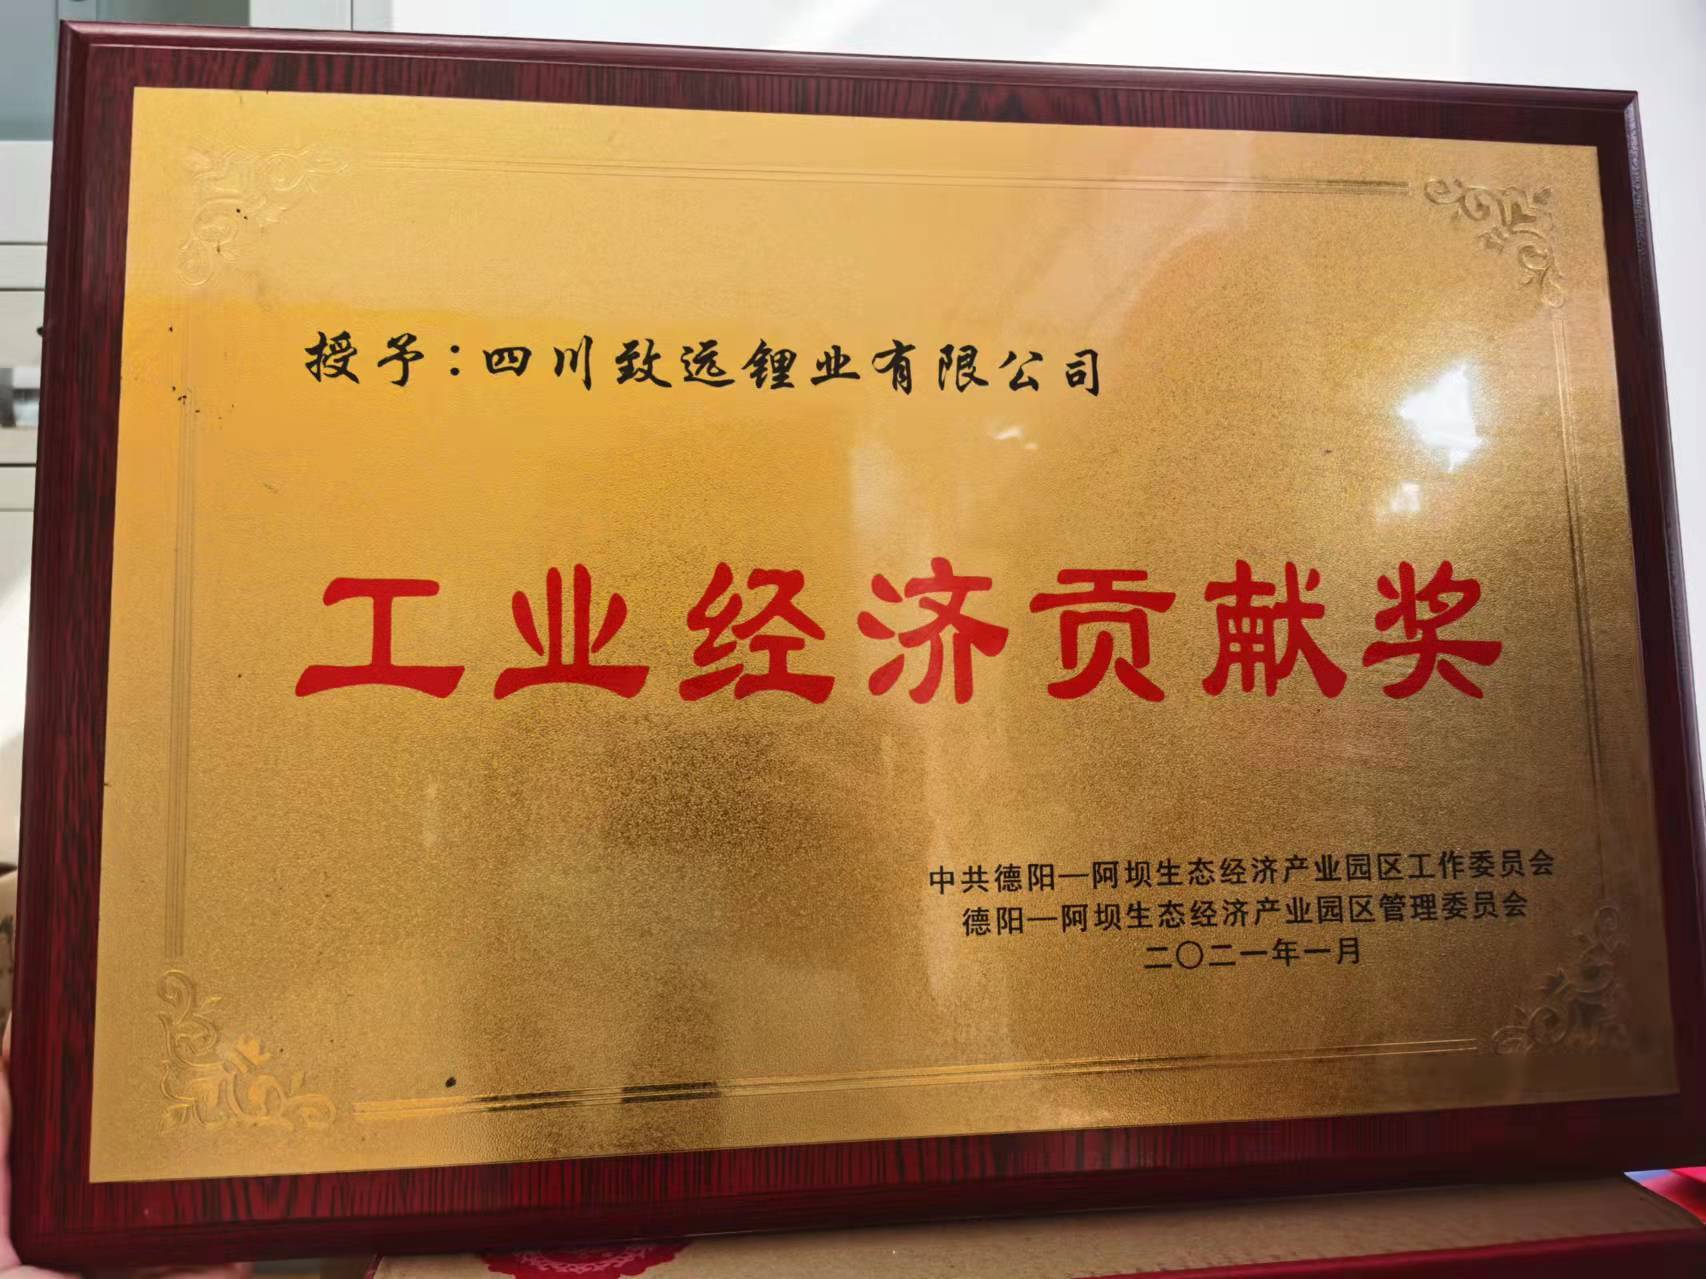 Zhiyuan Industrial Economic Contribution Award